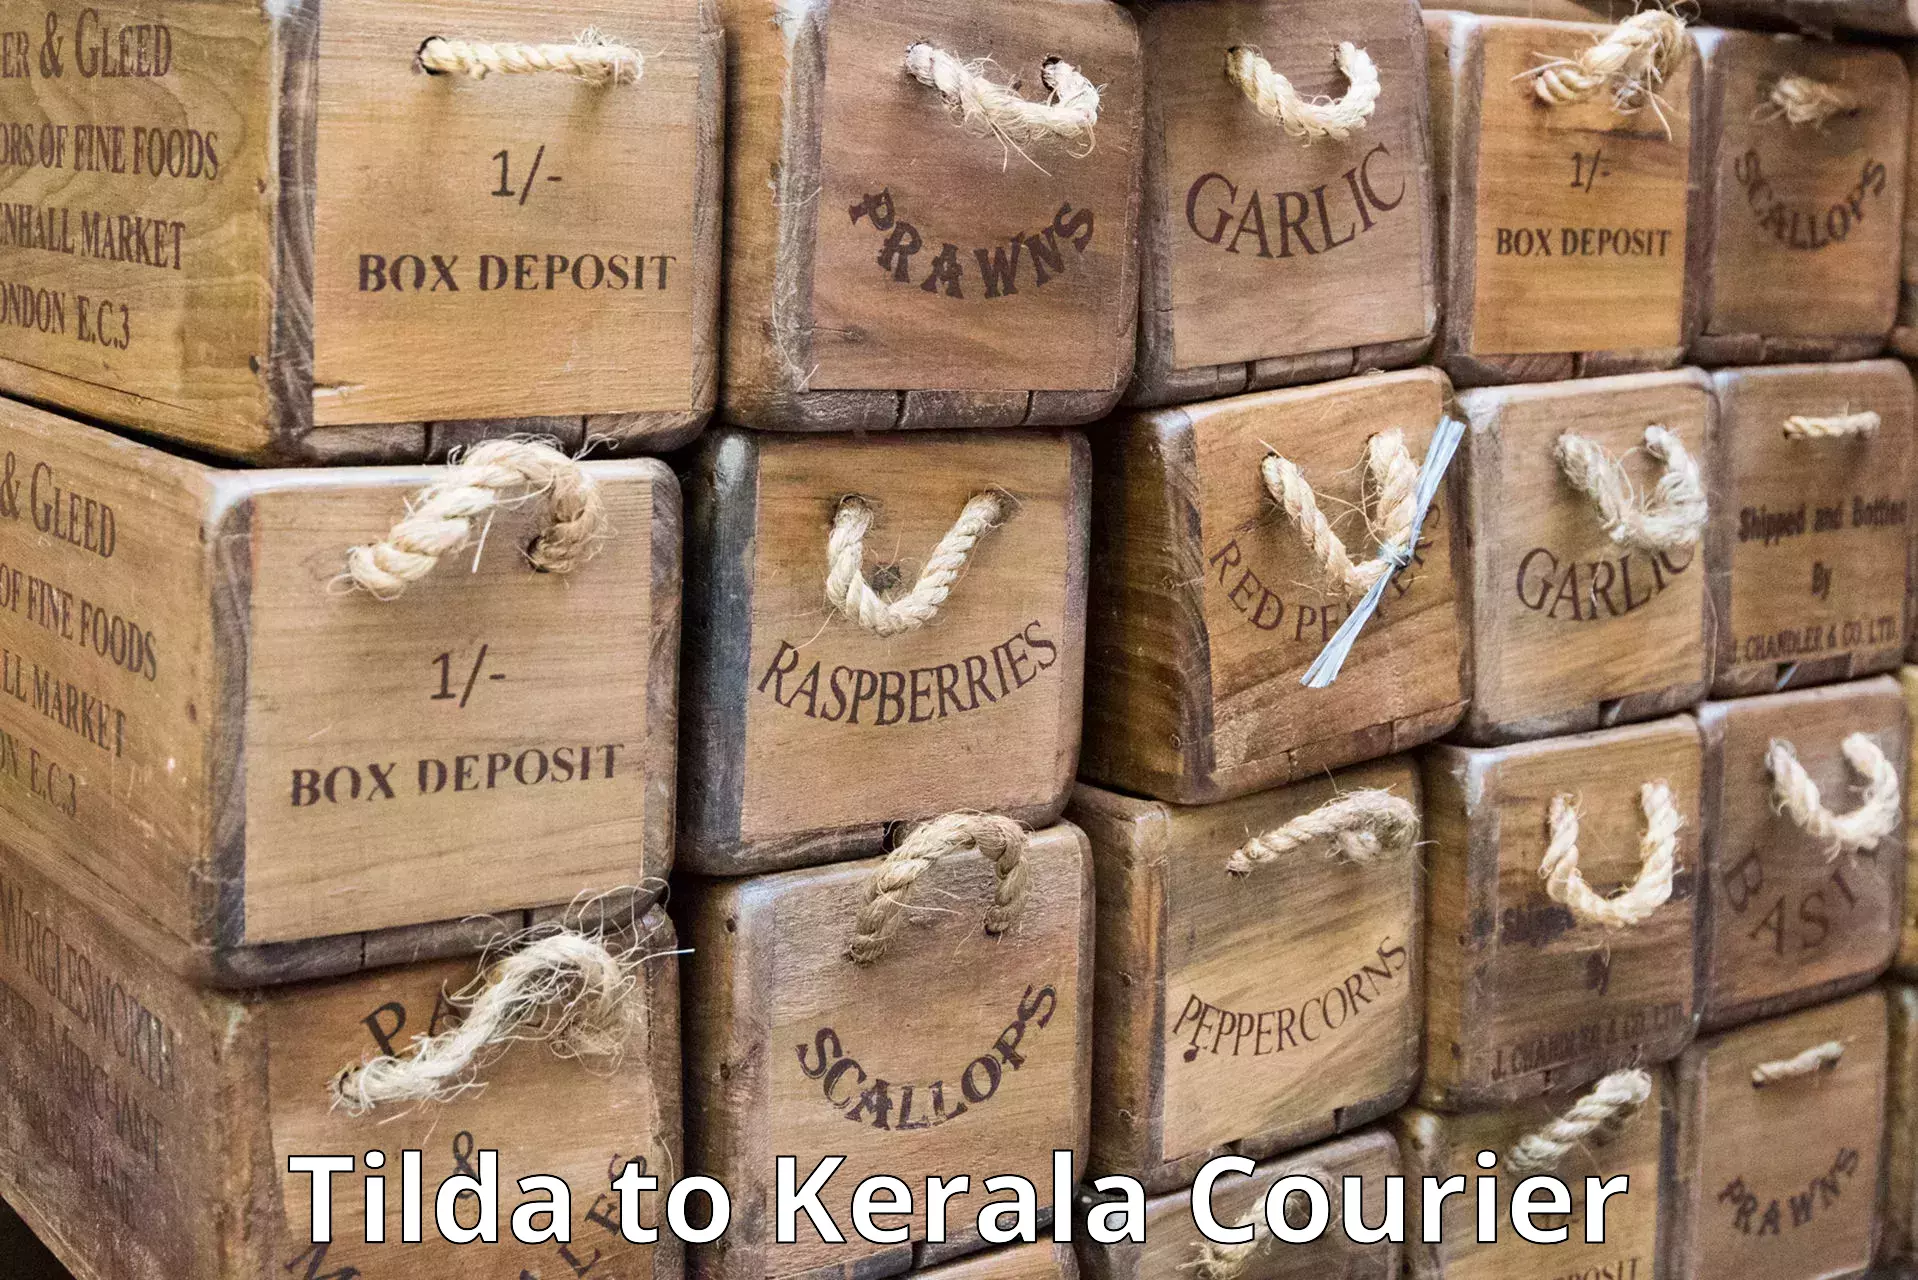 24-hour courier service Tilda to Cochin Port Kochi